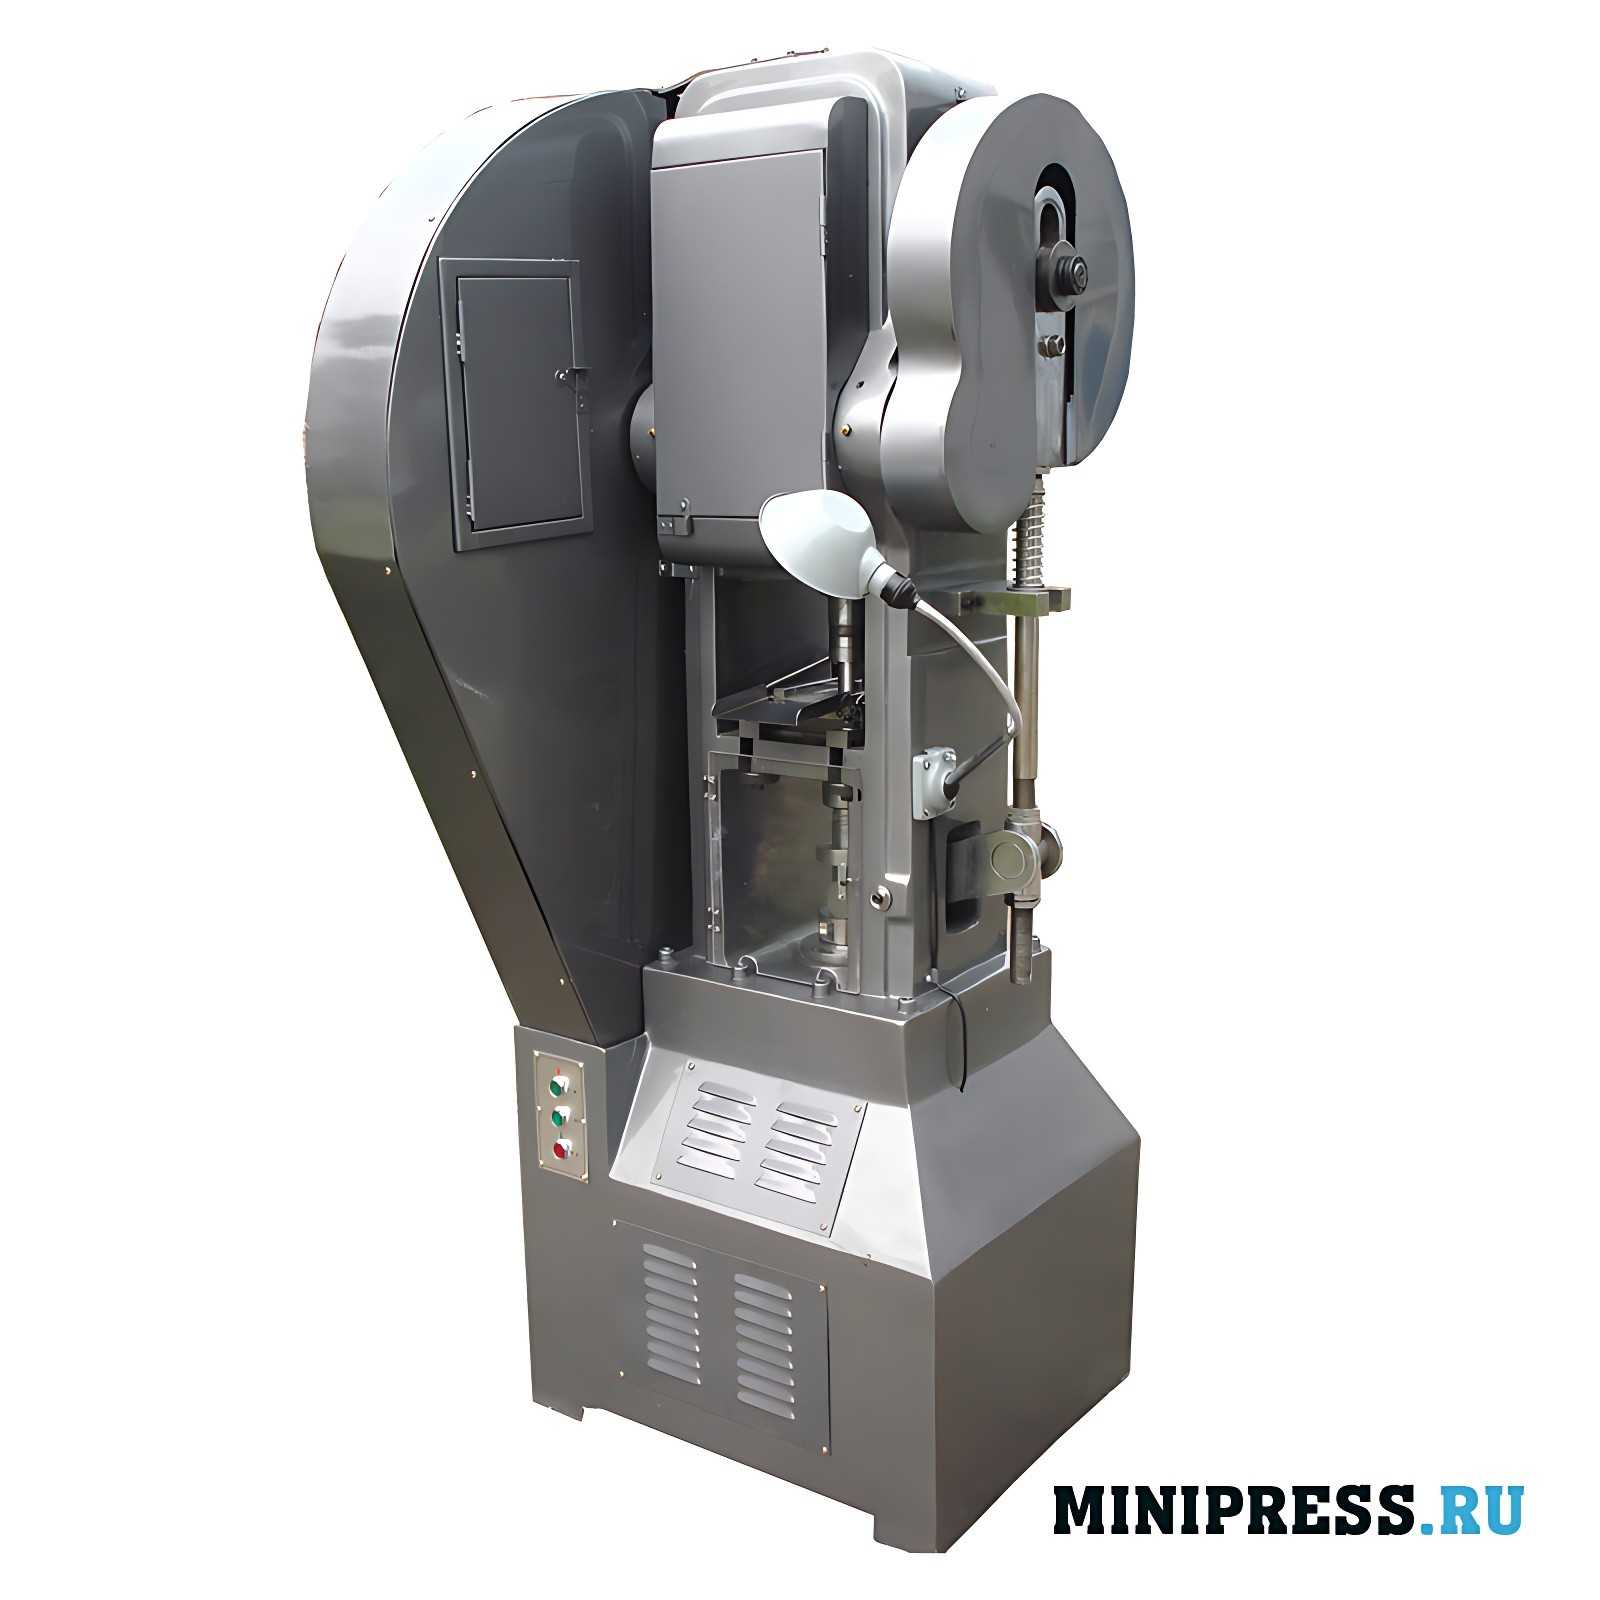 Mechanical tablet press PP-45